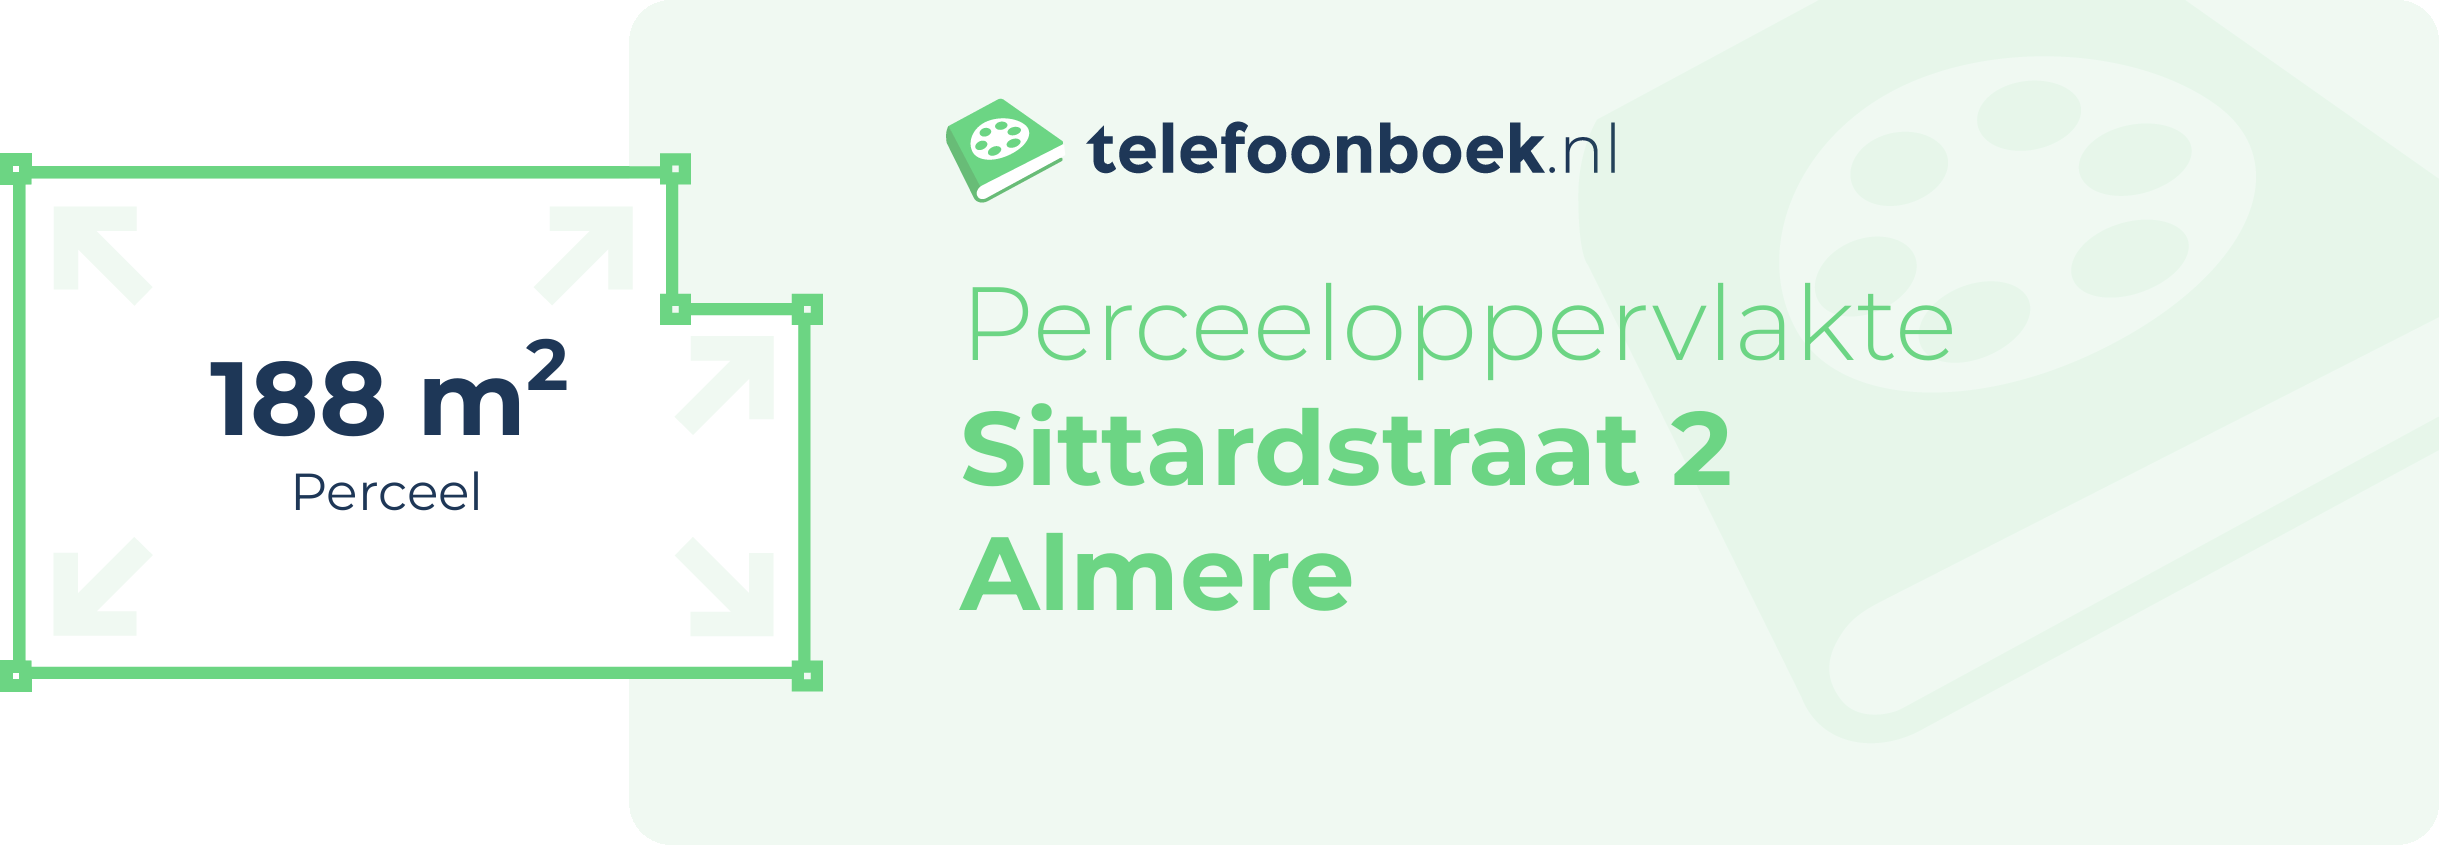 Perceeloppervlakte Sittardstraat 2 Almere